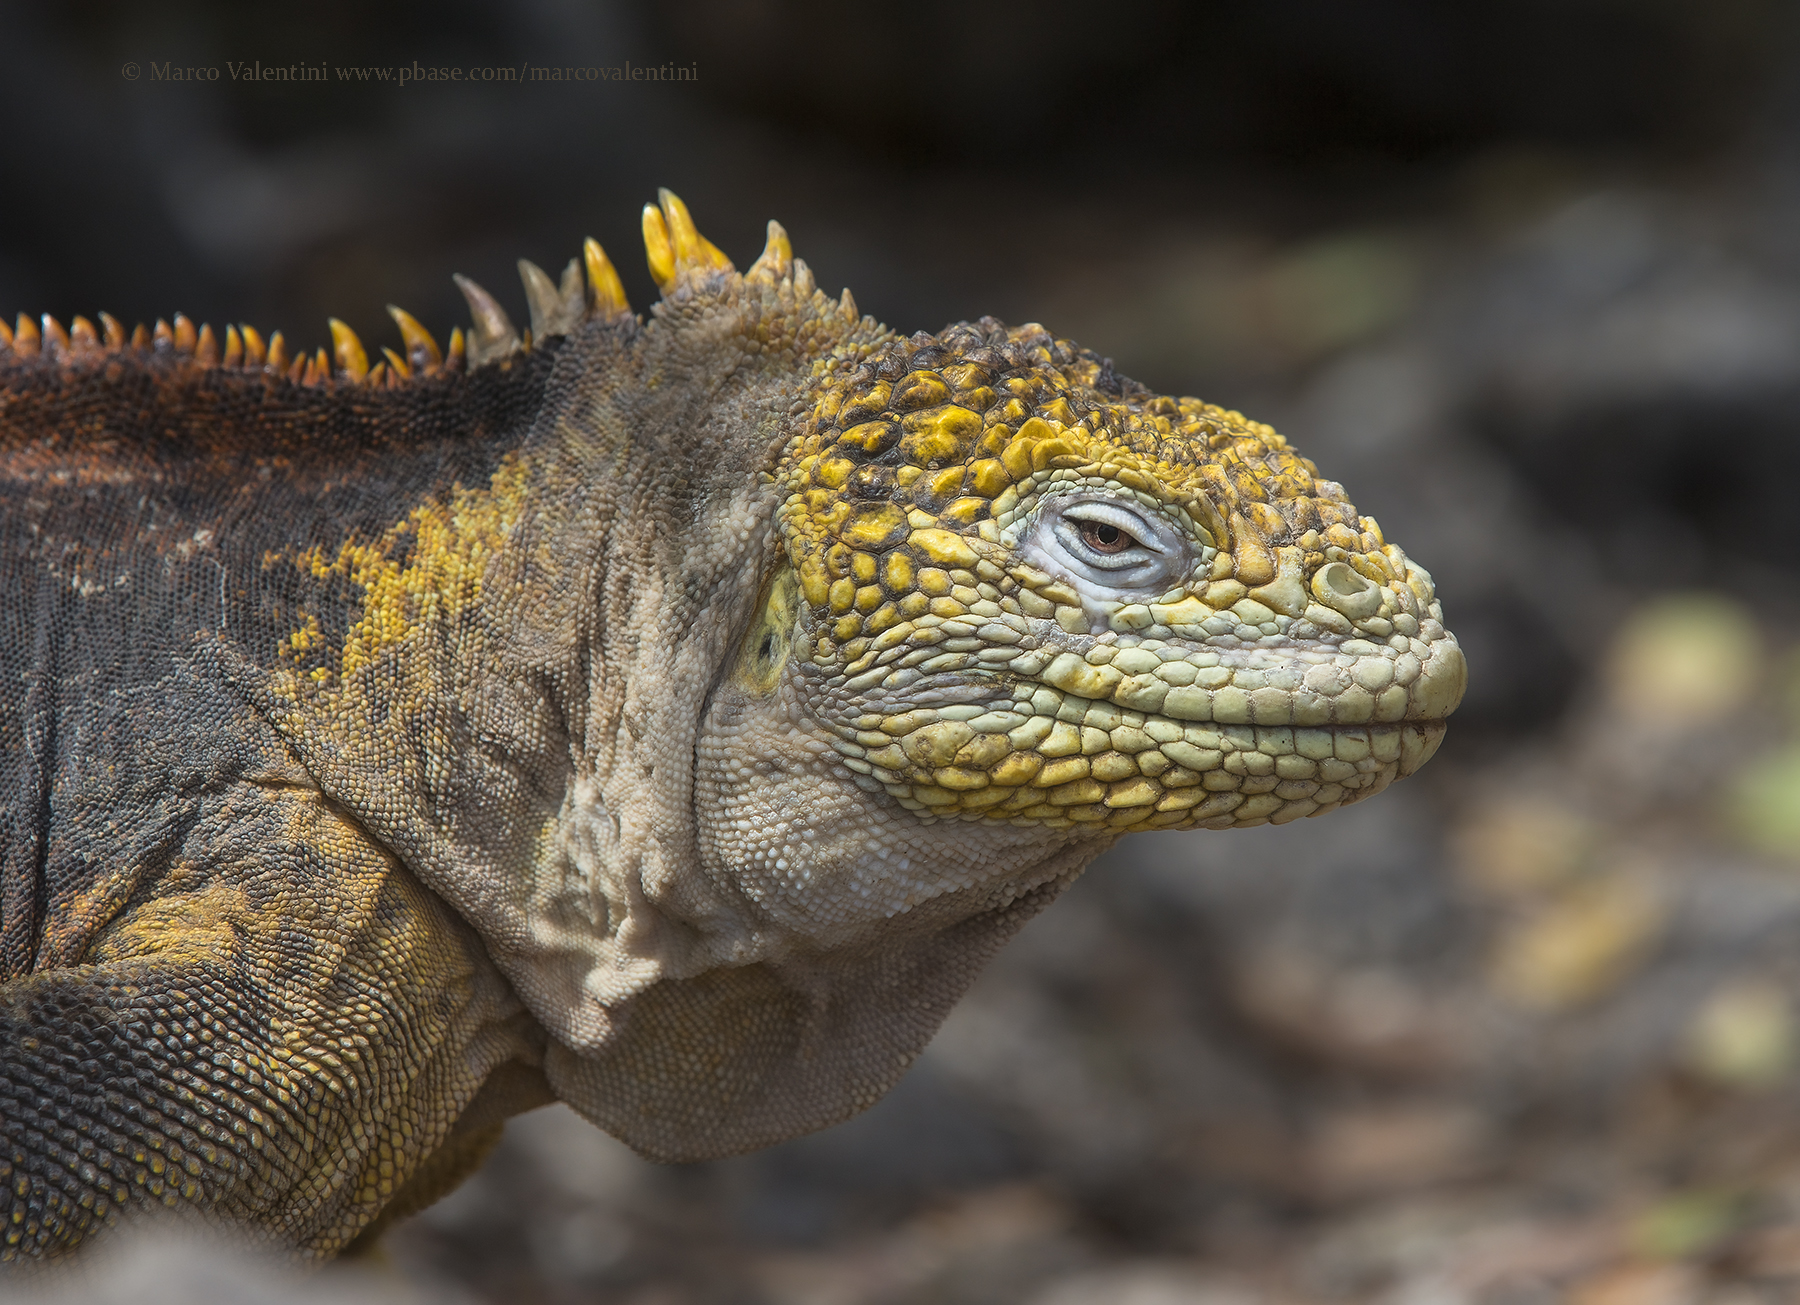 Galapagos Land iguana - Conolophus subcristatus